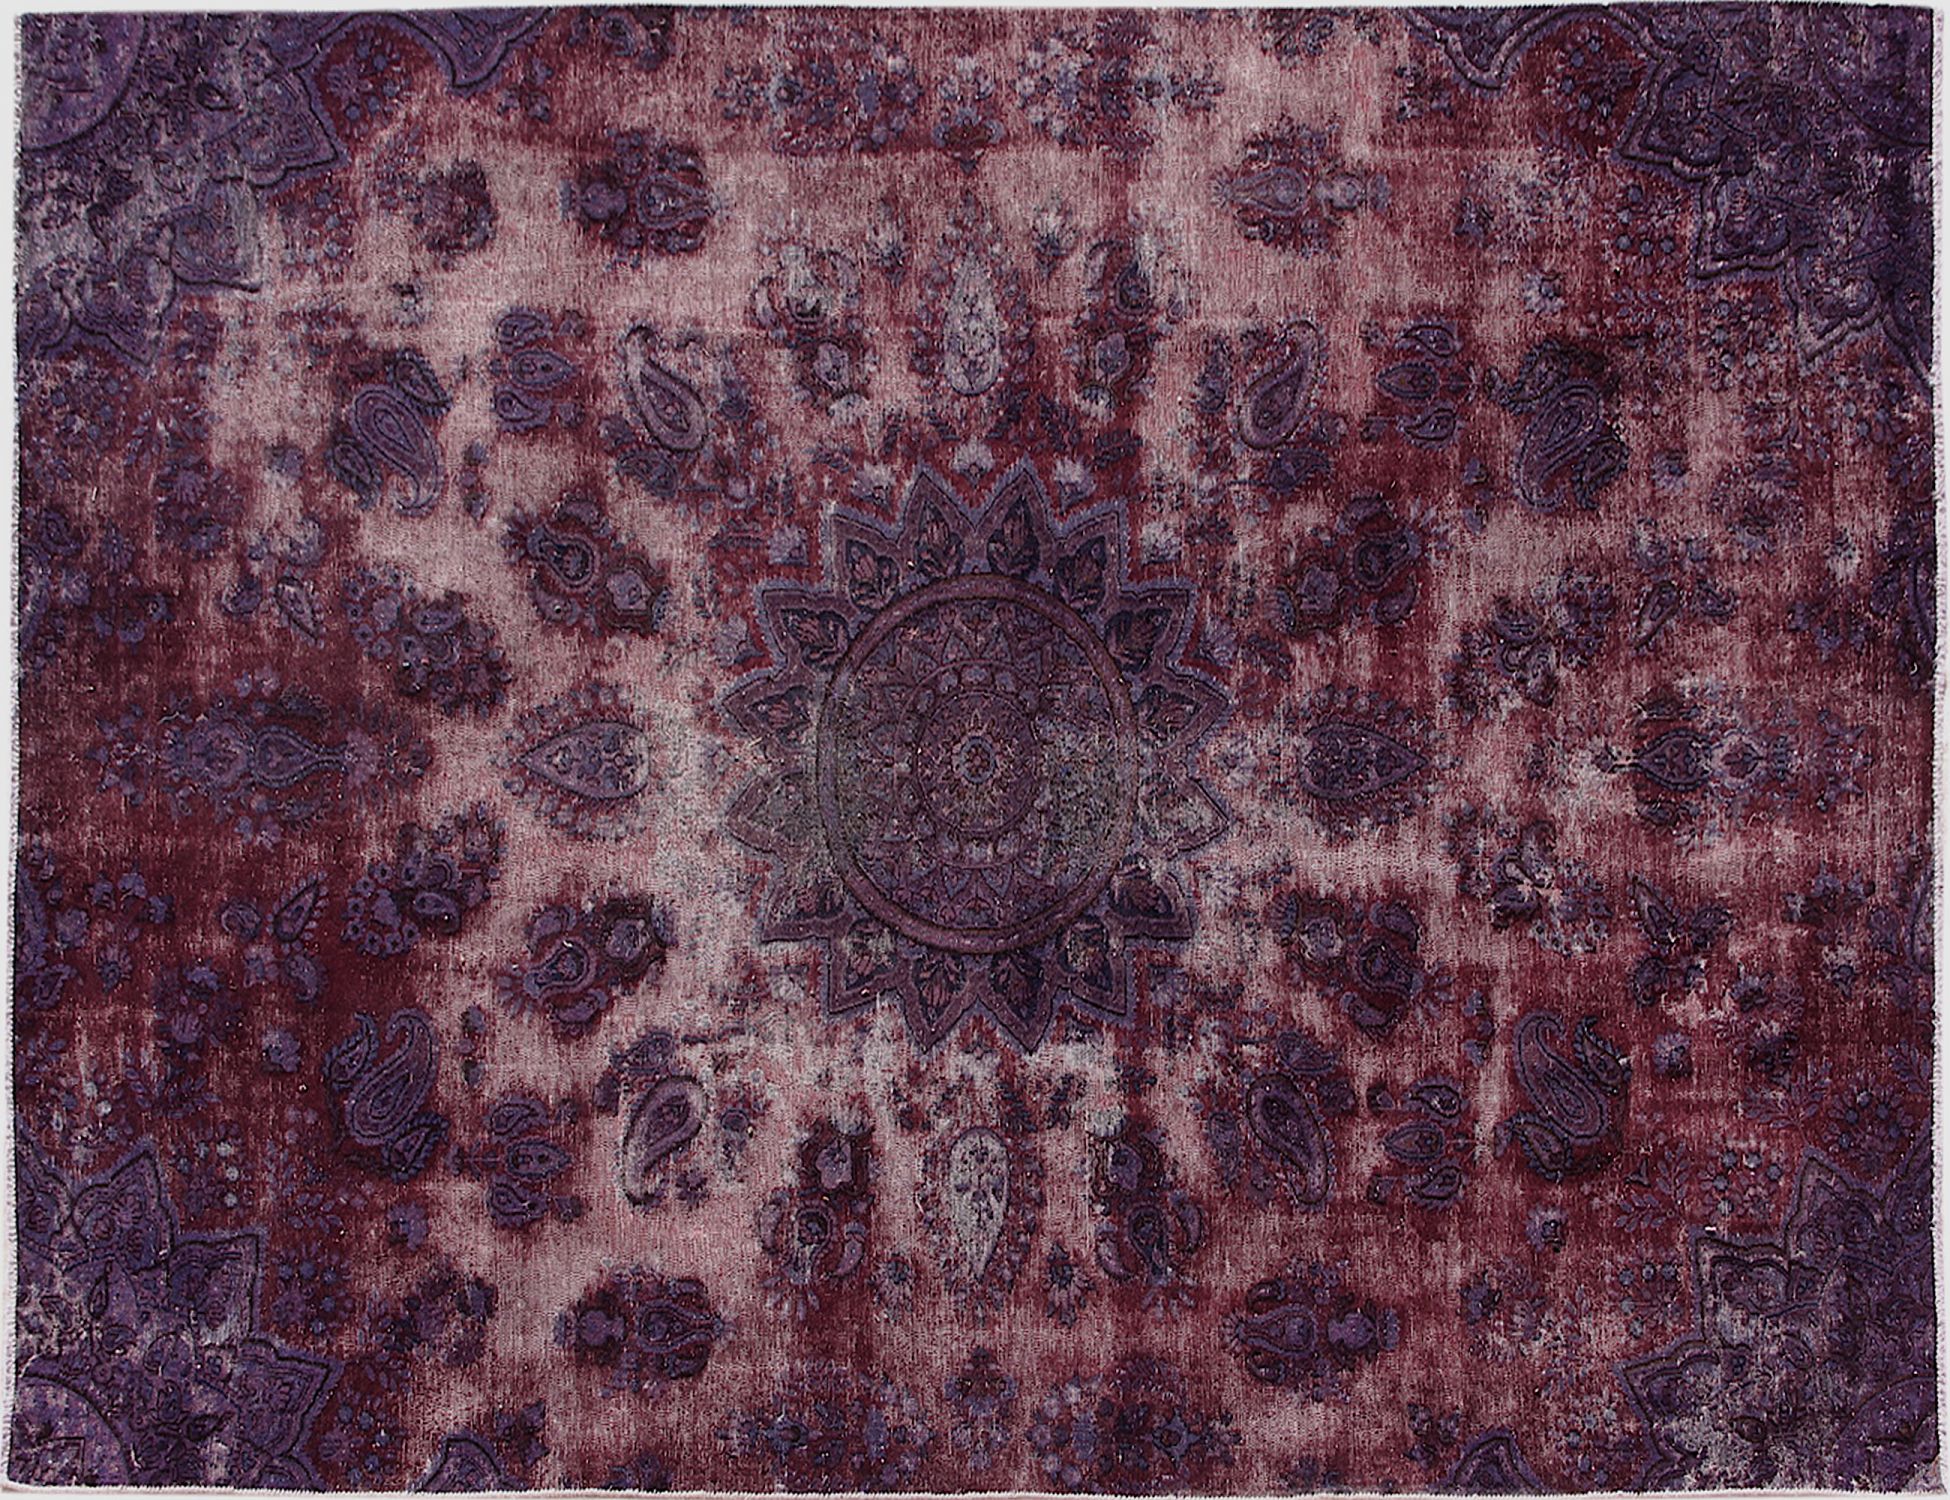 Persialaiset vintage matot  violetti <br/>315 x 205 cm